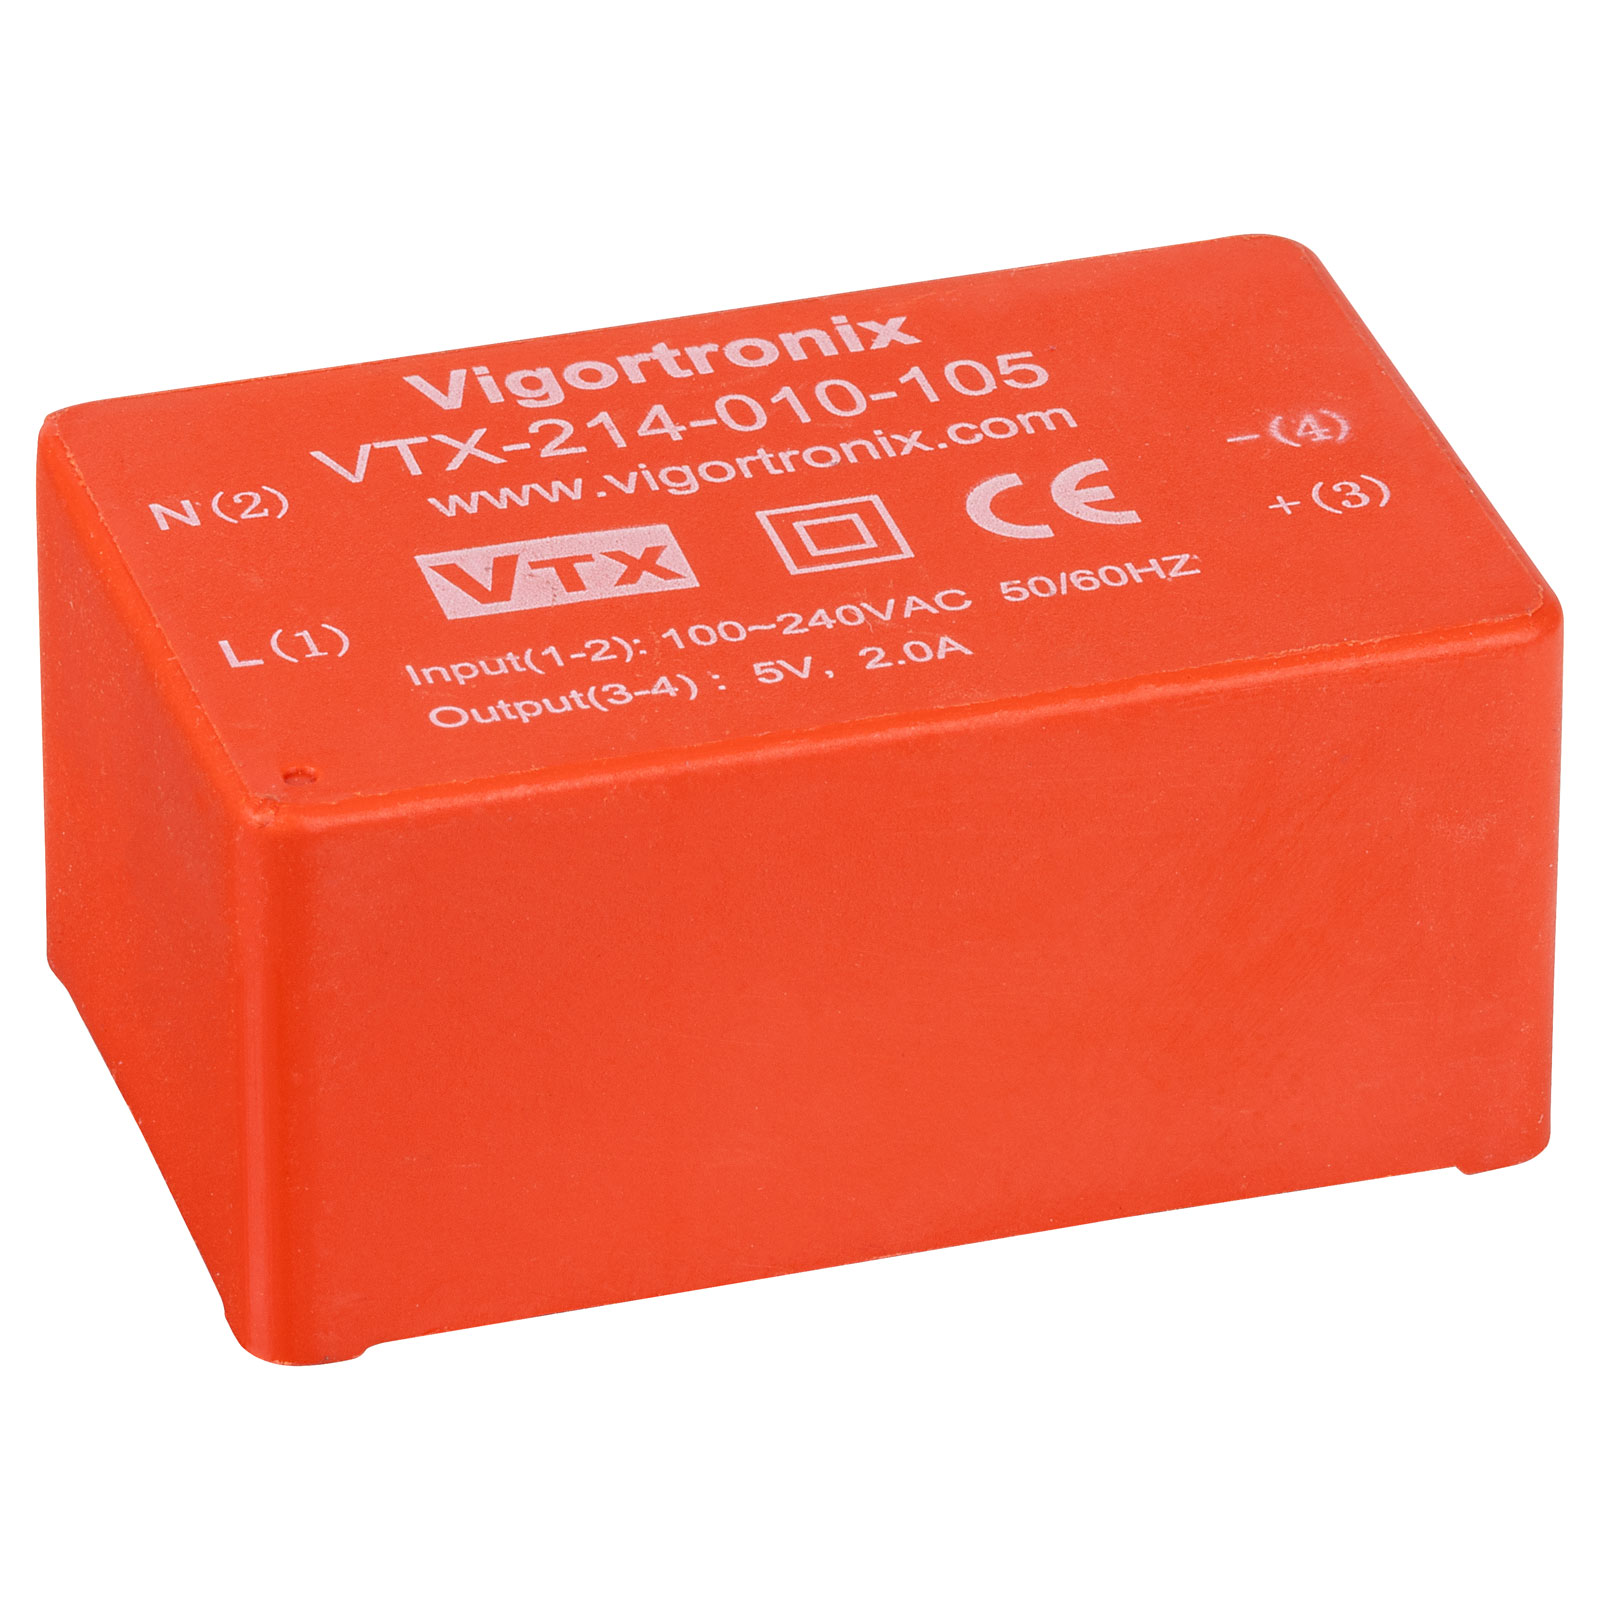 VTX-214-010-105 10Watt AC-DC SMPS PCB Module - Regulated